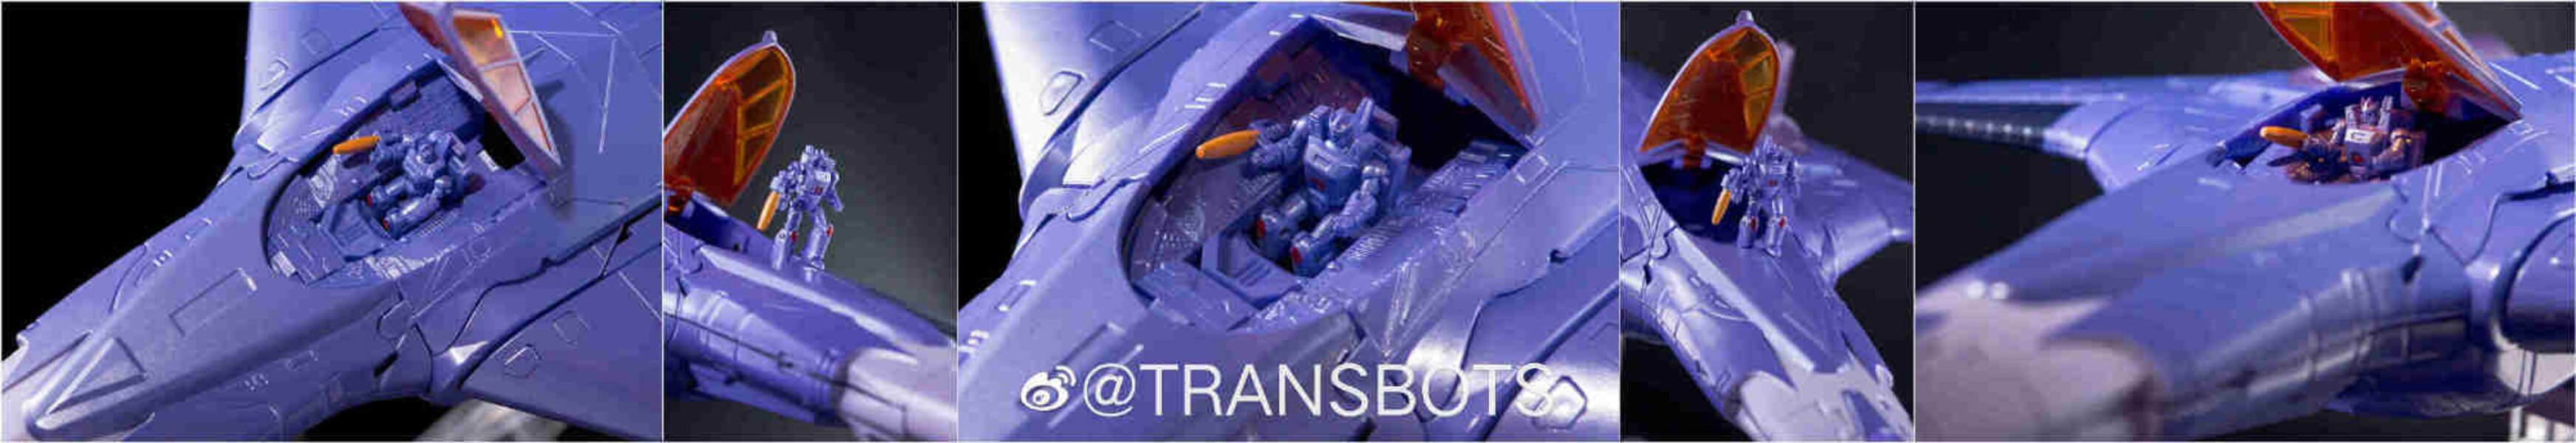 X Transbots MX 3+ Eligos (Cyclonus) Metallic Edition Image  (15 of 17)